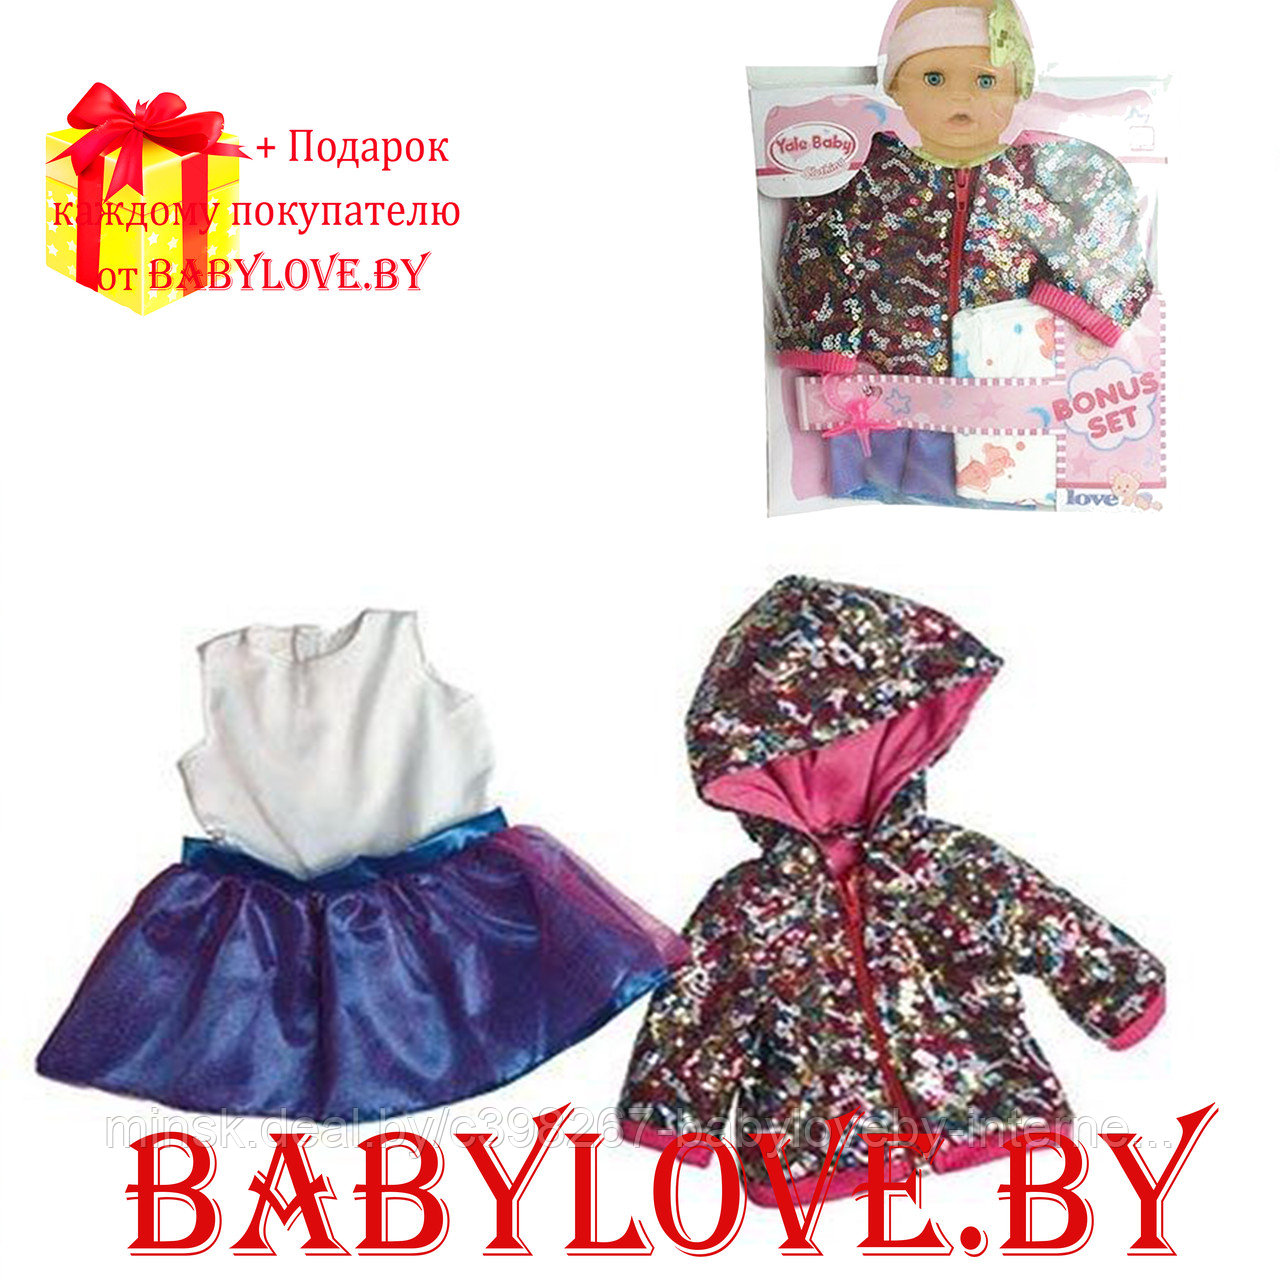 Одежда для кукол BLC208B пупсов 42-43 см в ассортименте (baby doll, baby love, baby born,yale baby)